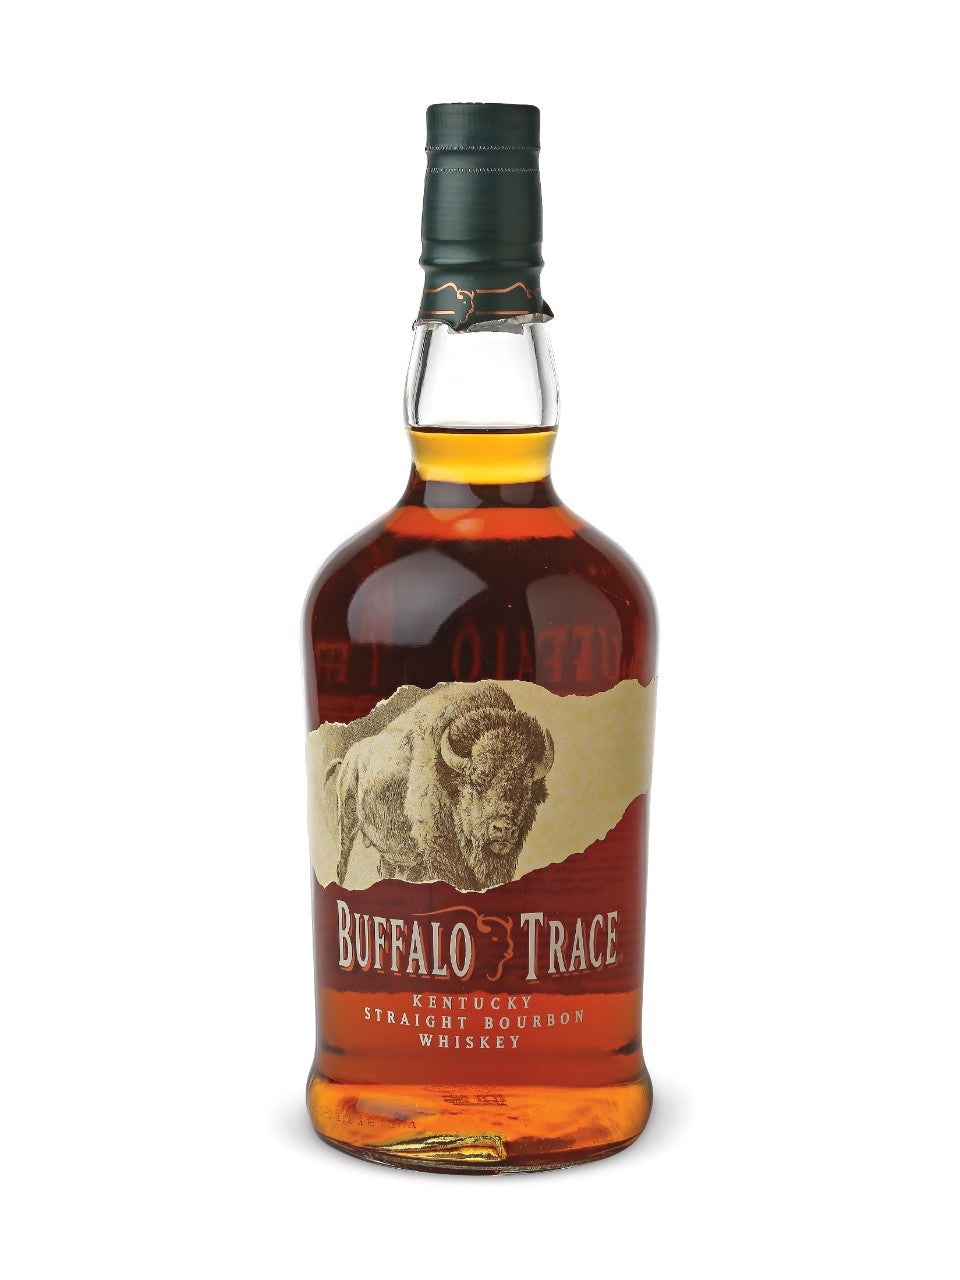 Buffalo Trace Kentucky Straight Bourbon Whiskey 750 mL bottle